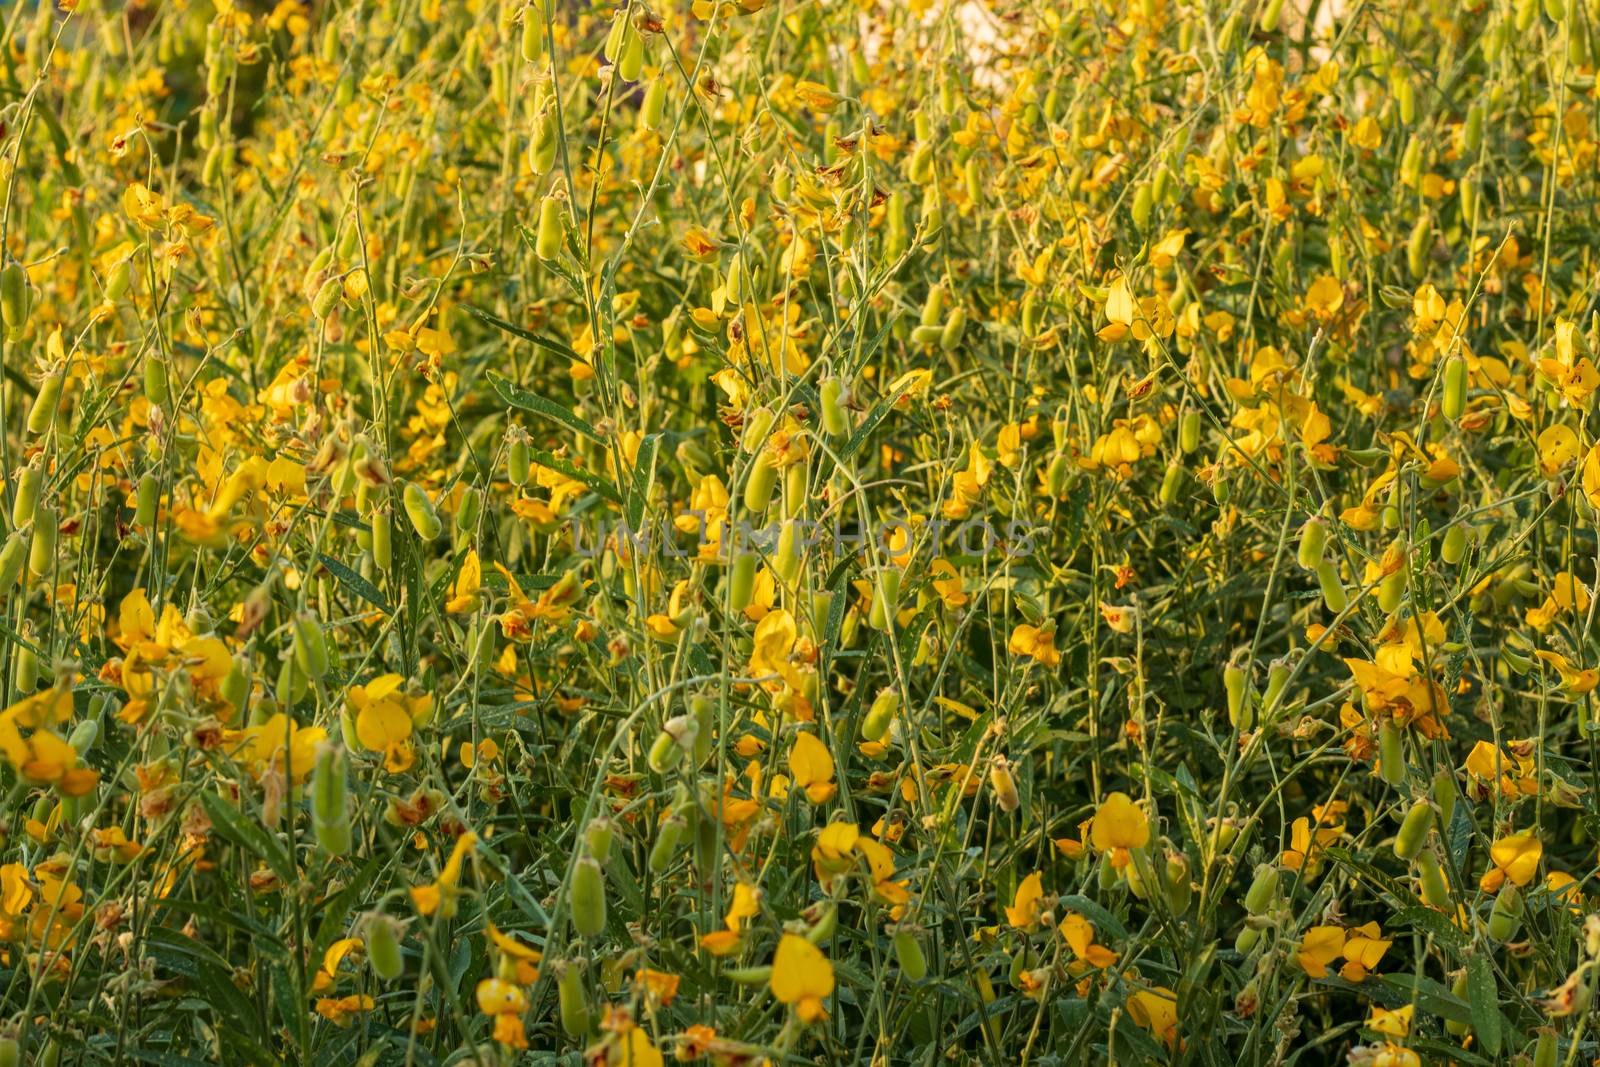 Sunn hemp Indian hemp Crotalaria juncea or Pummelo field is a beautiful yellow flower in fields.